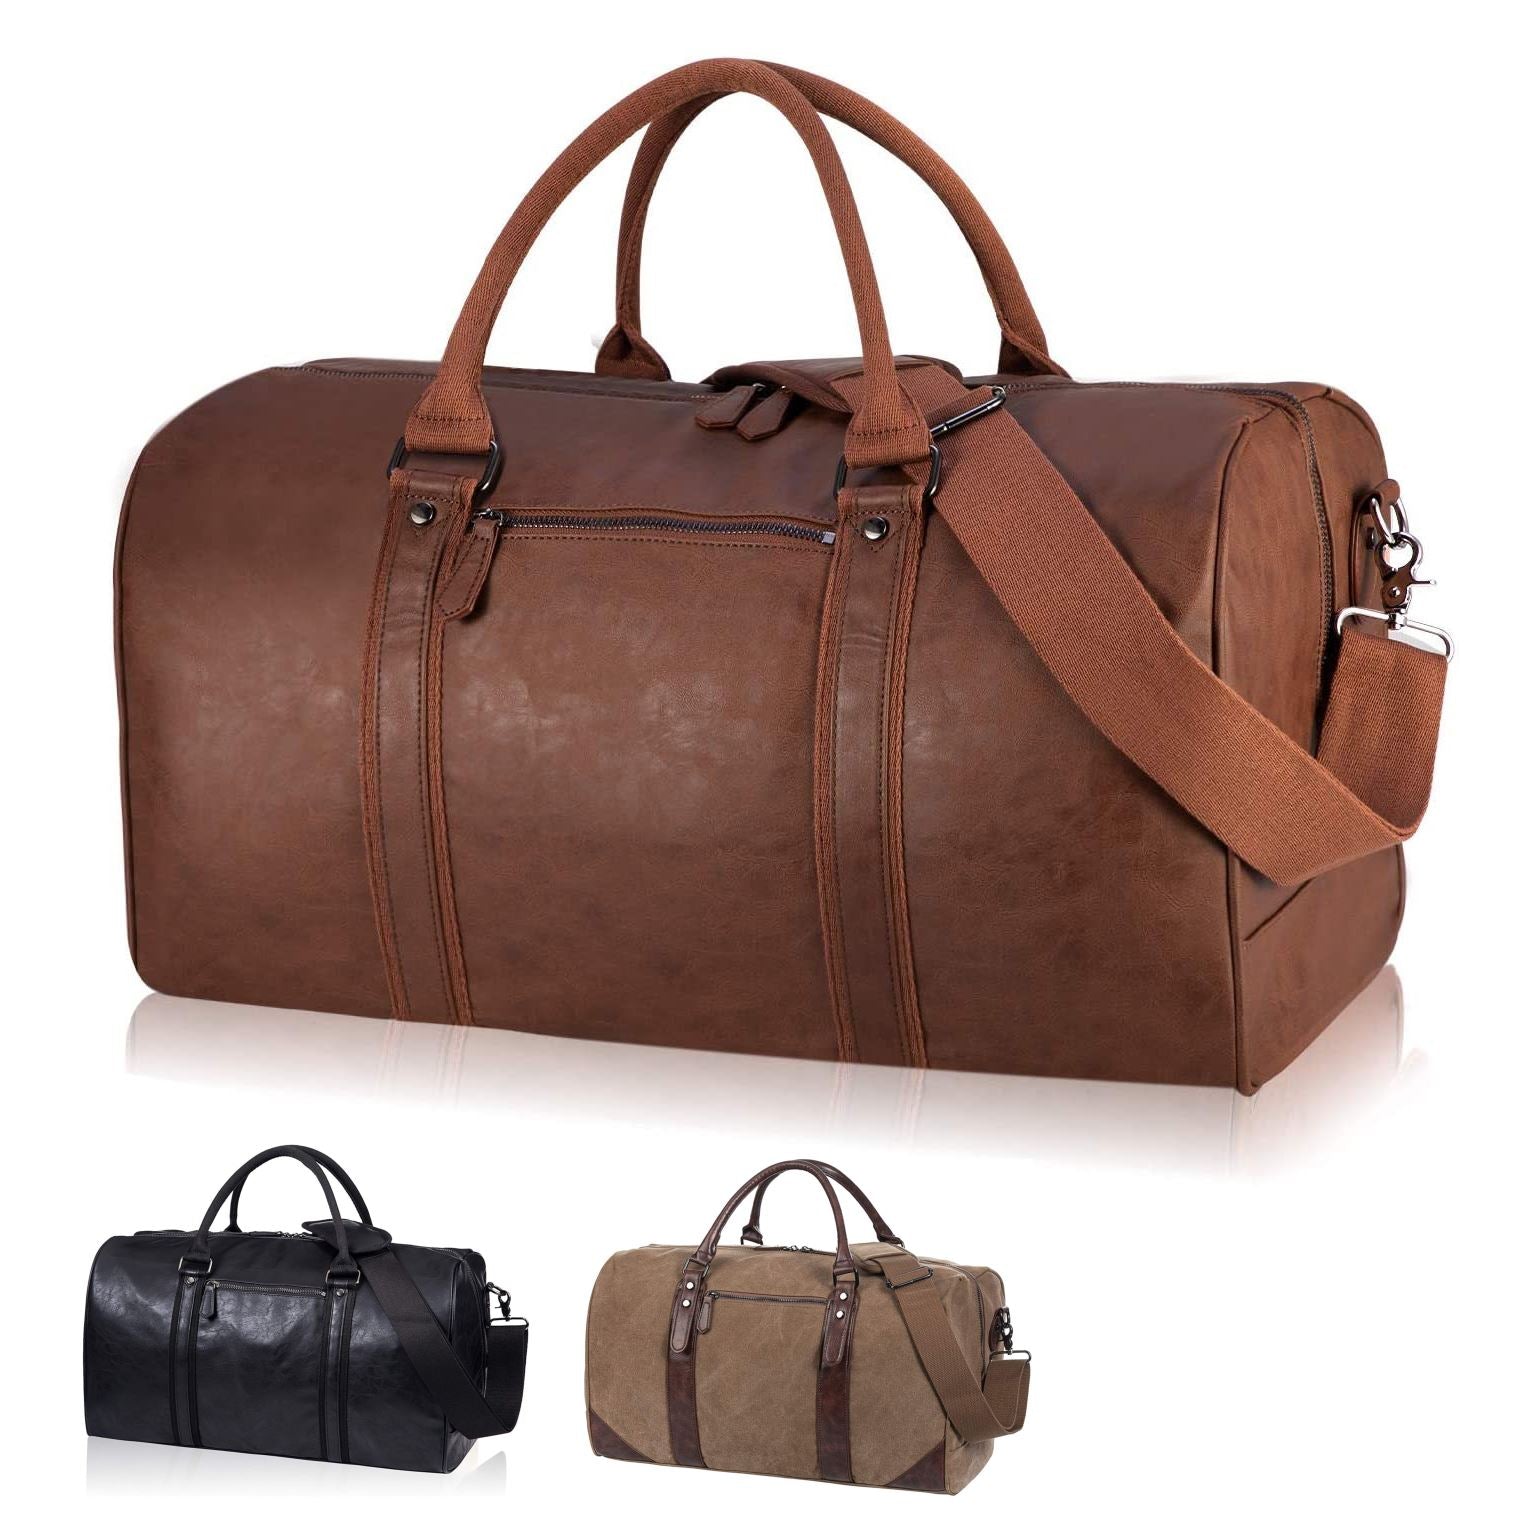 SYFashion™ Men's Vintage Leather 52L Oversized Travel Gym Duffle Weekend Bag Duffle Travel Bag SYFashion™ Brown 